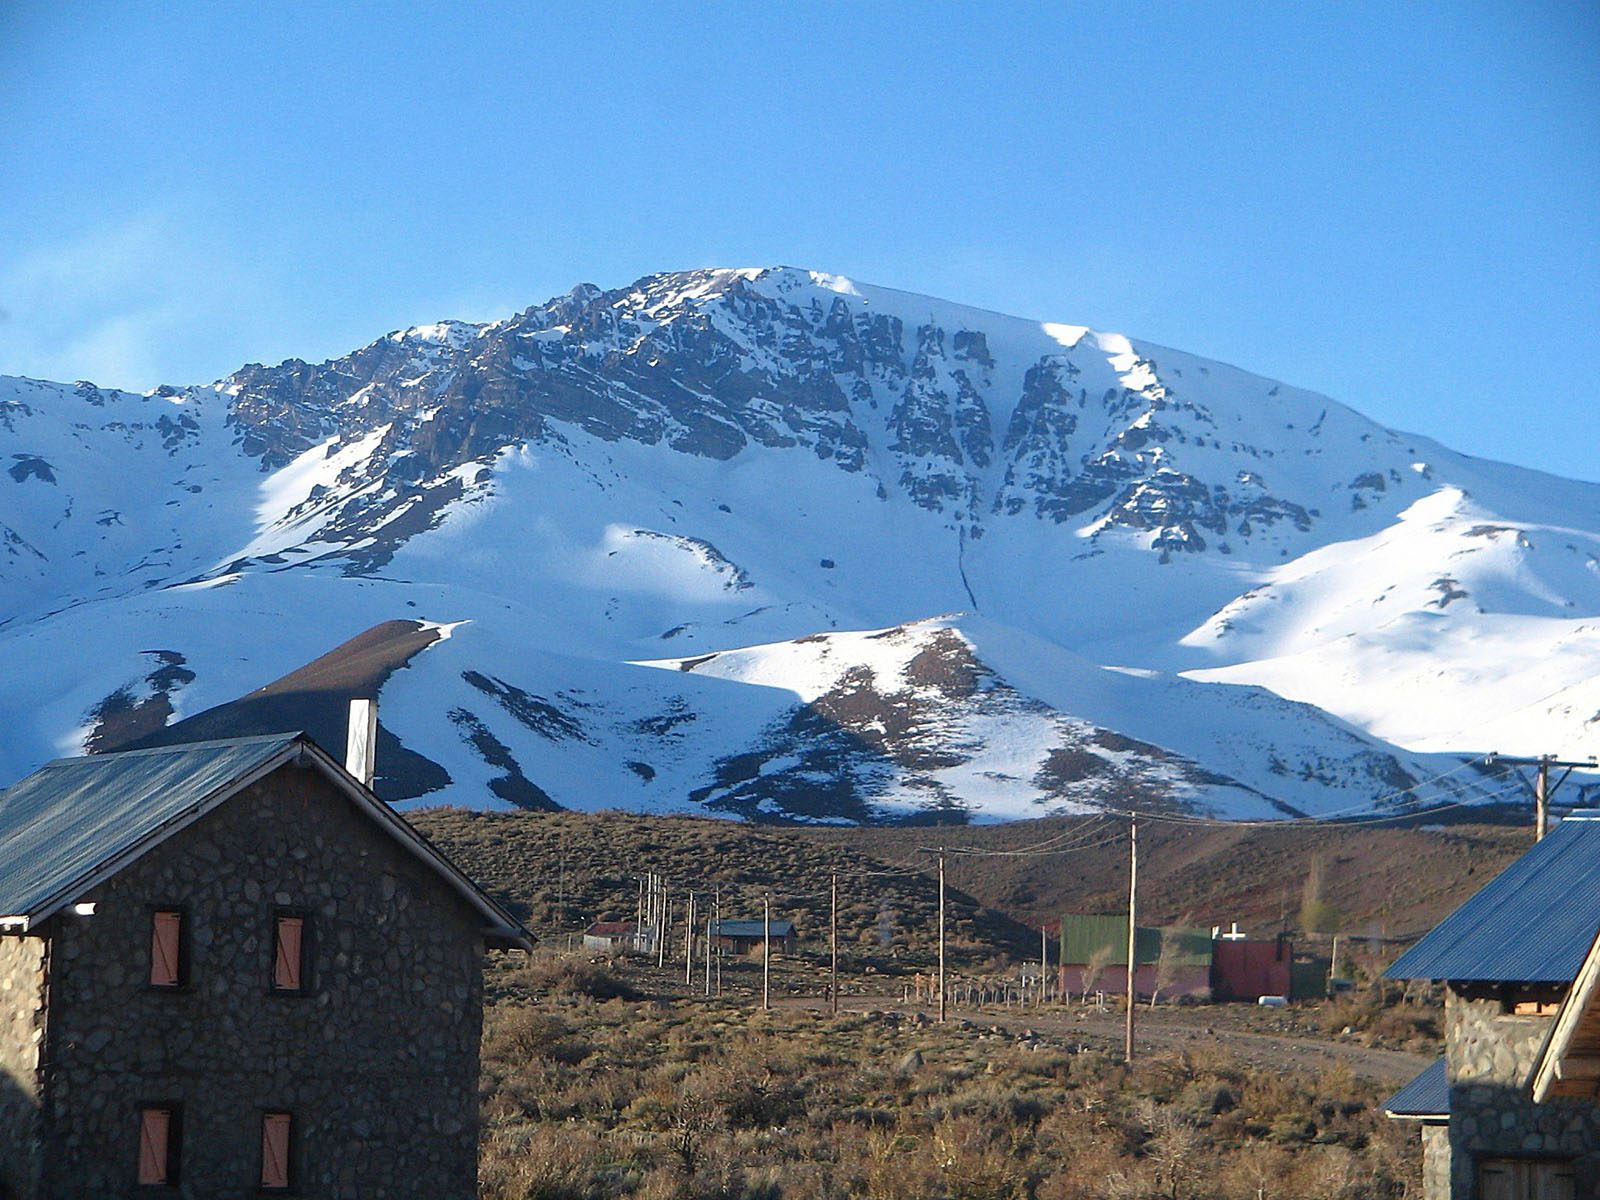 Photo: Valle de los Molles, in the same department of Malargue, but more near Las Leñas ski resort.